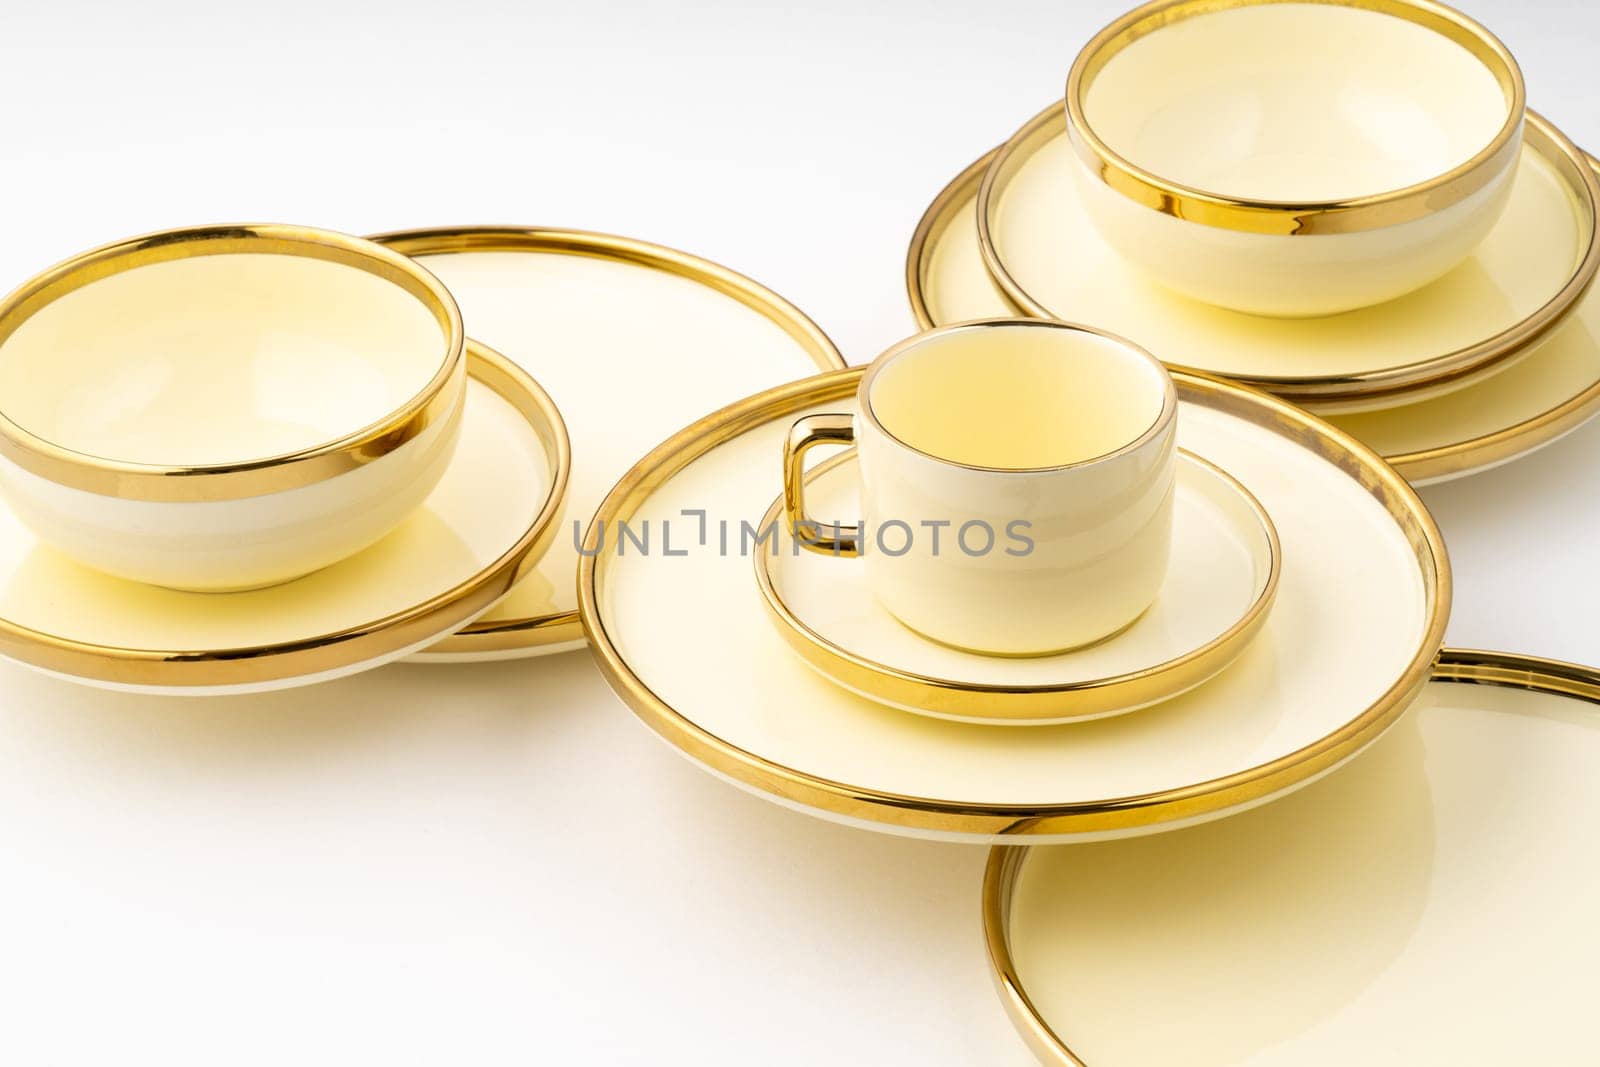 A set of golden luxury ceramic kitchen utensils on a white background